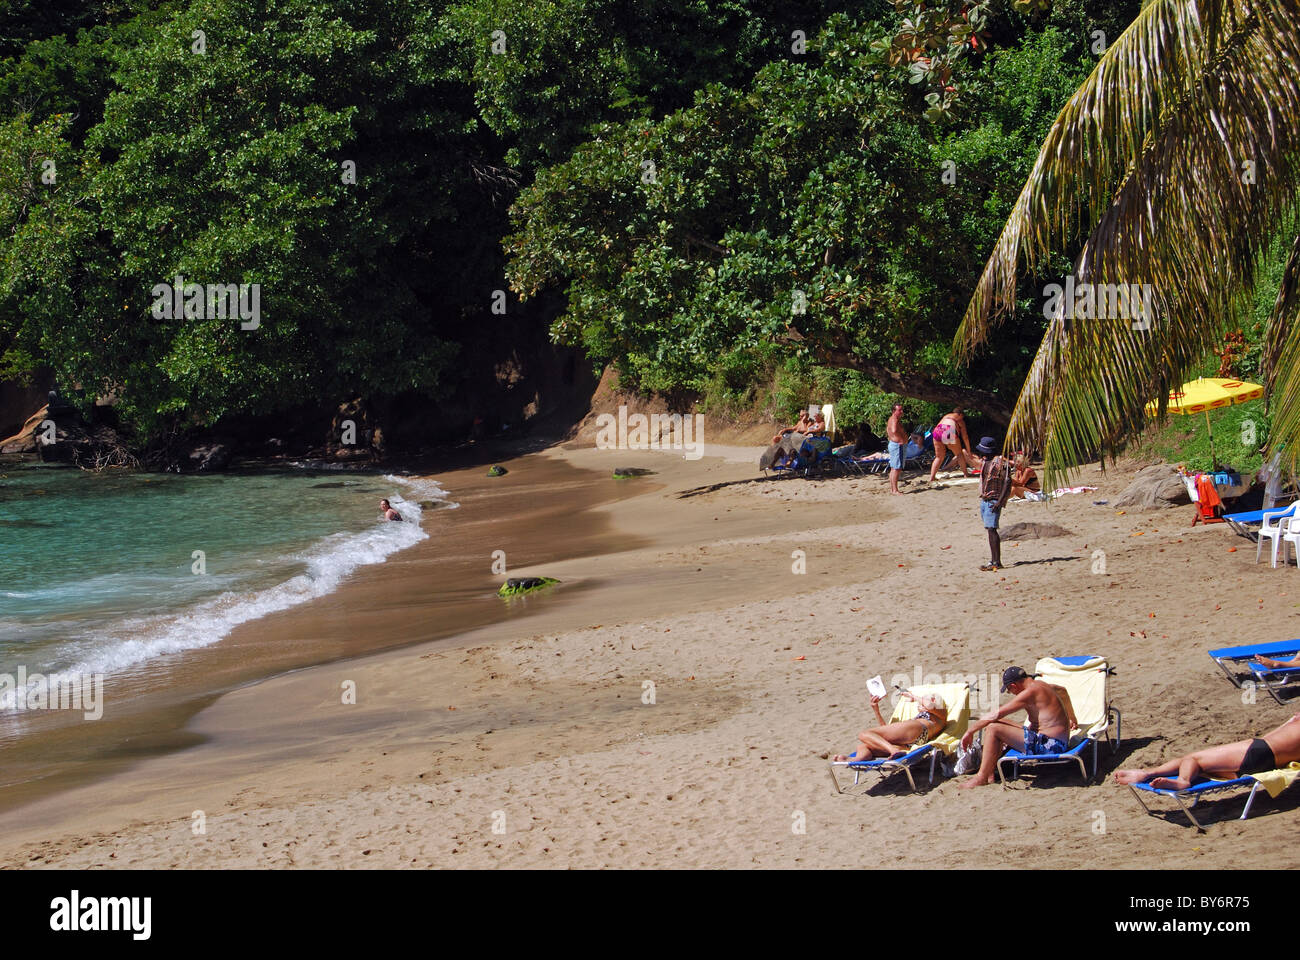 Blick entlang der Strand, Kingstown, St. Vincent und die Grenadinen, Karibik. Stockfoto